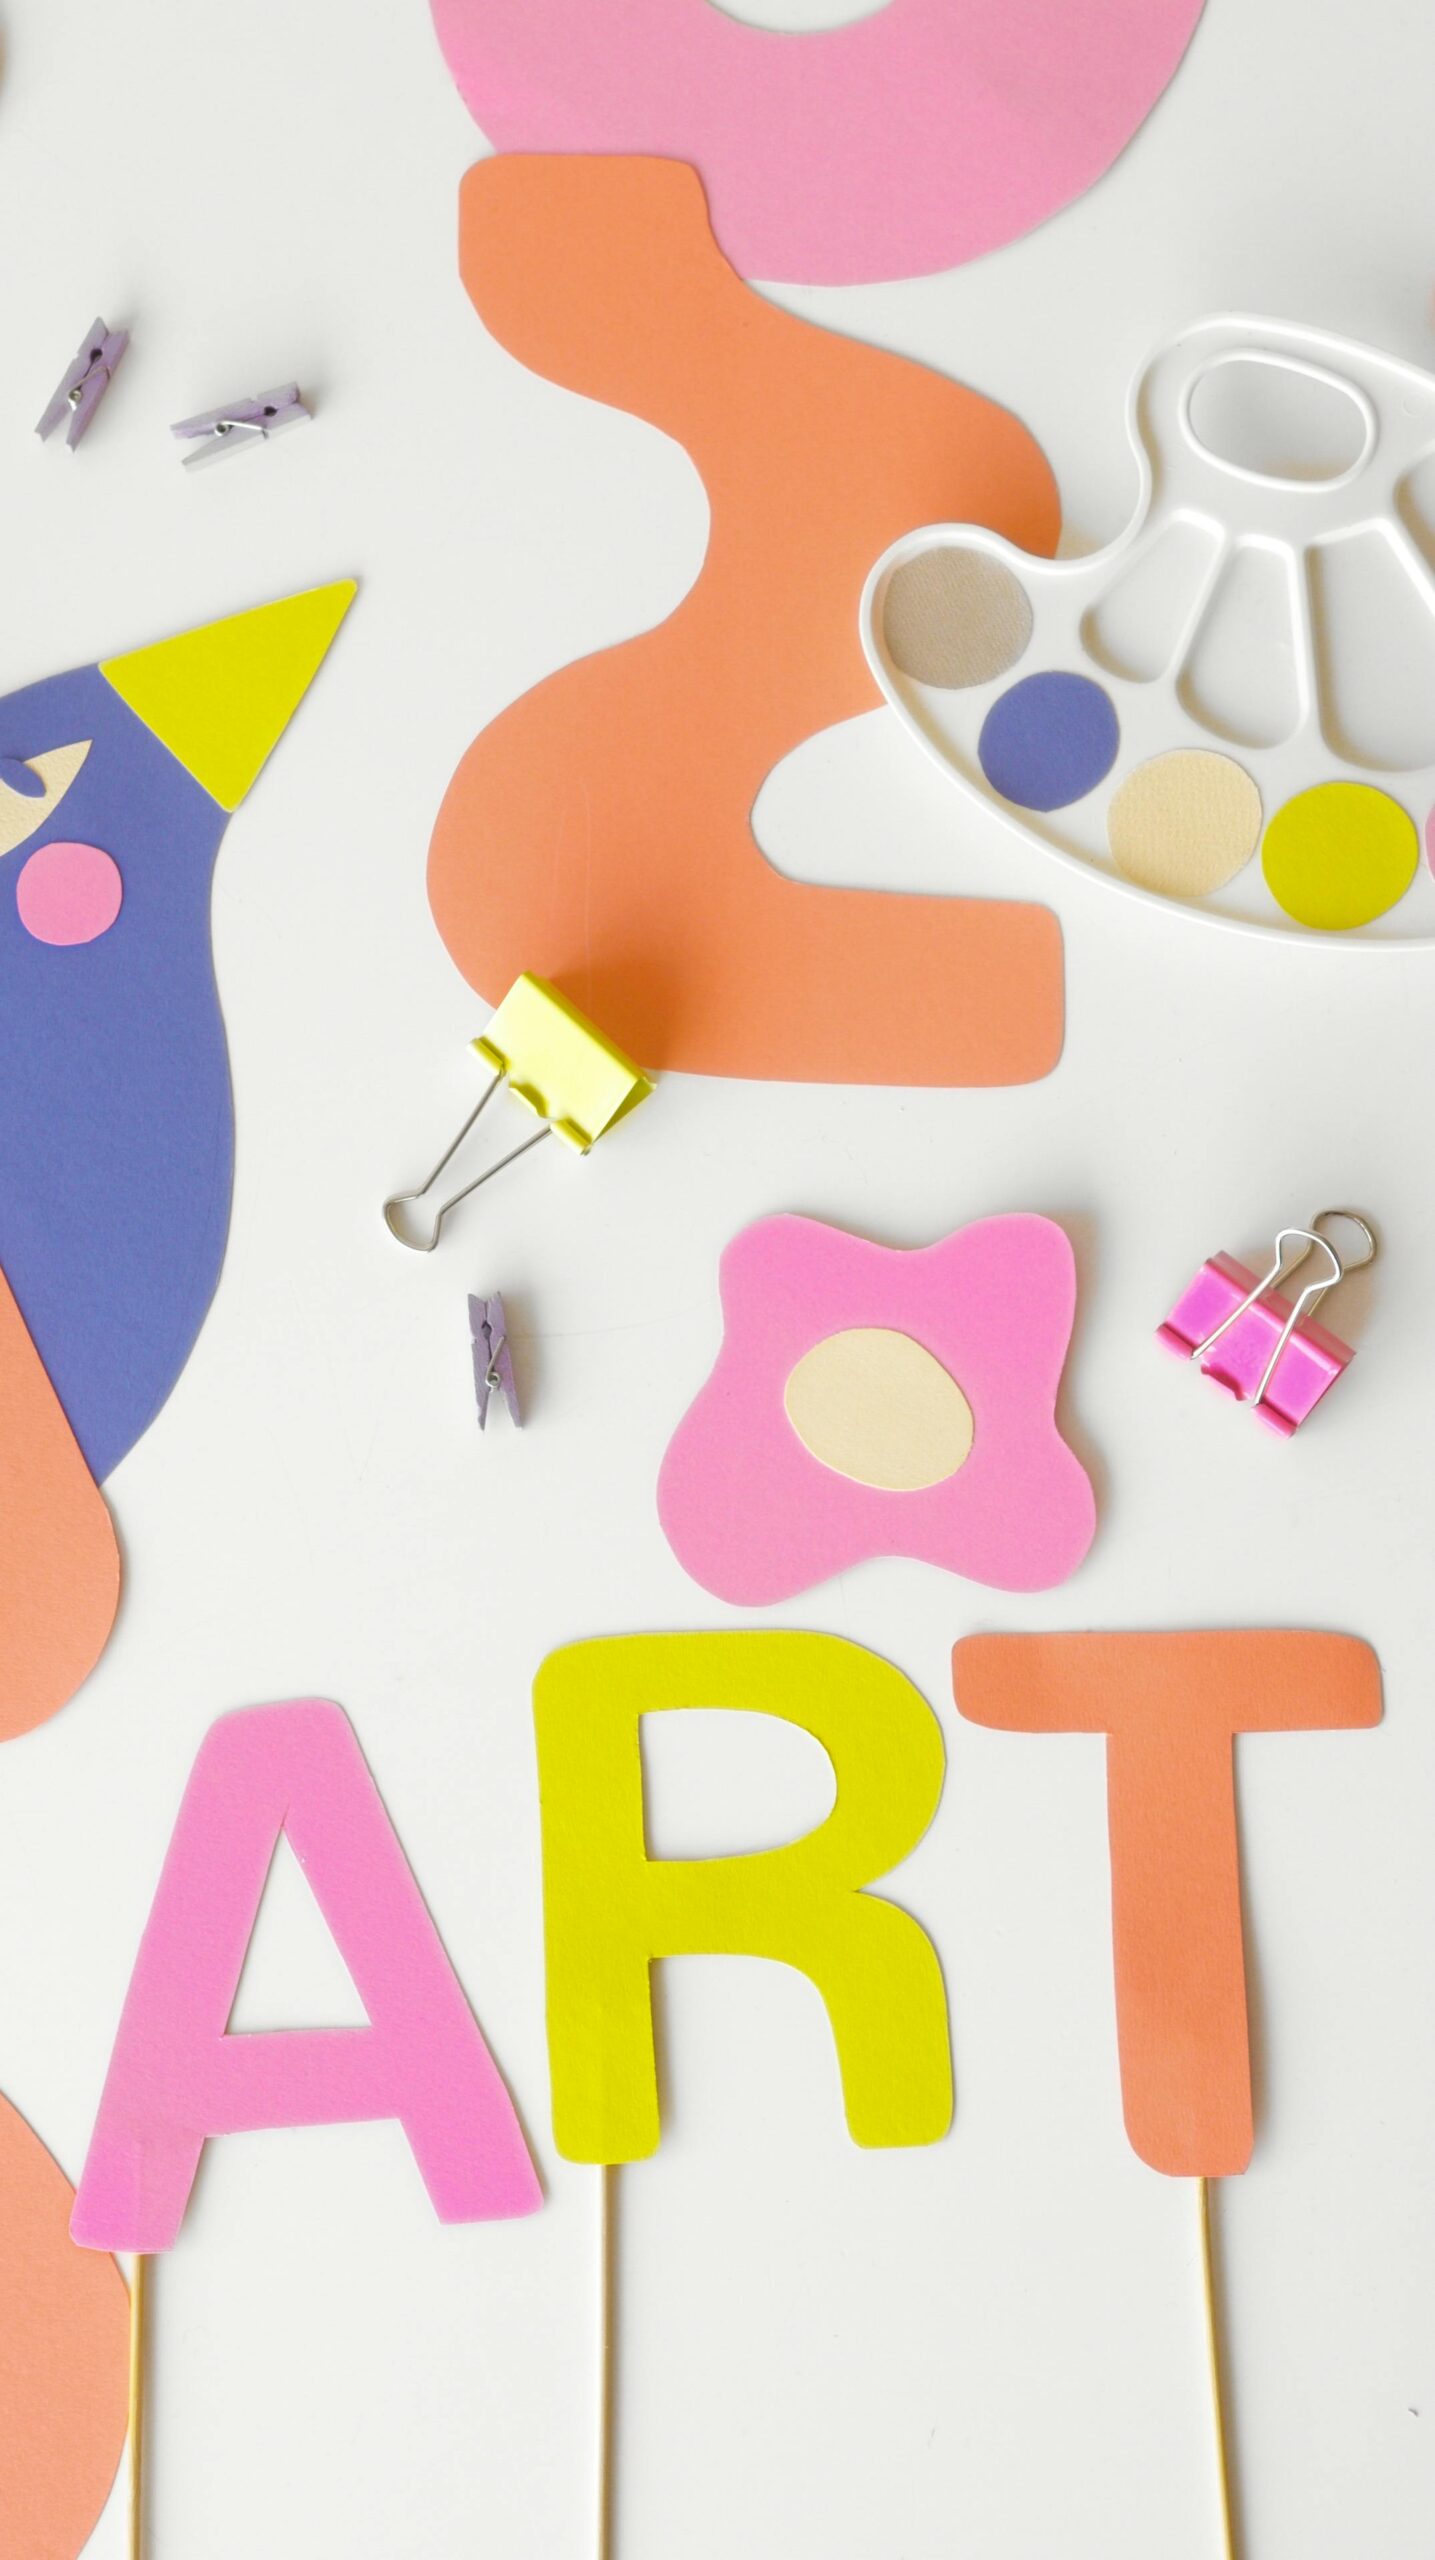 14 Captivating Handmade Craft Ideas for Your Home